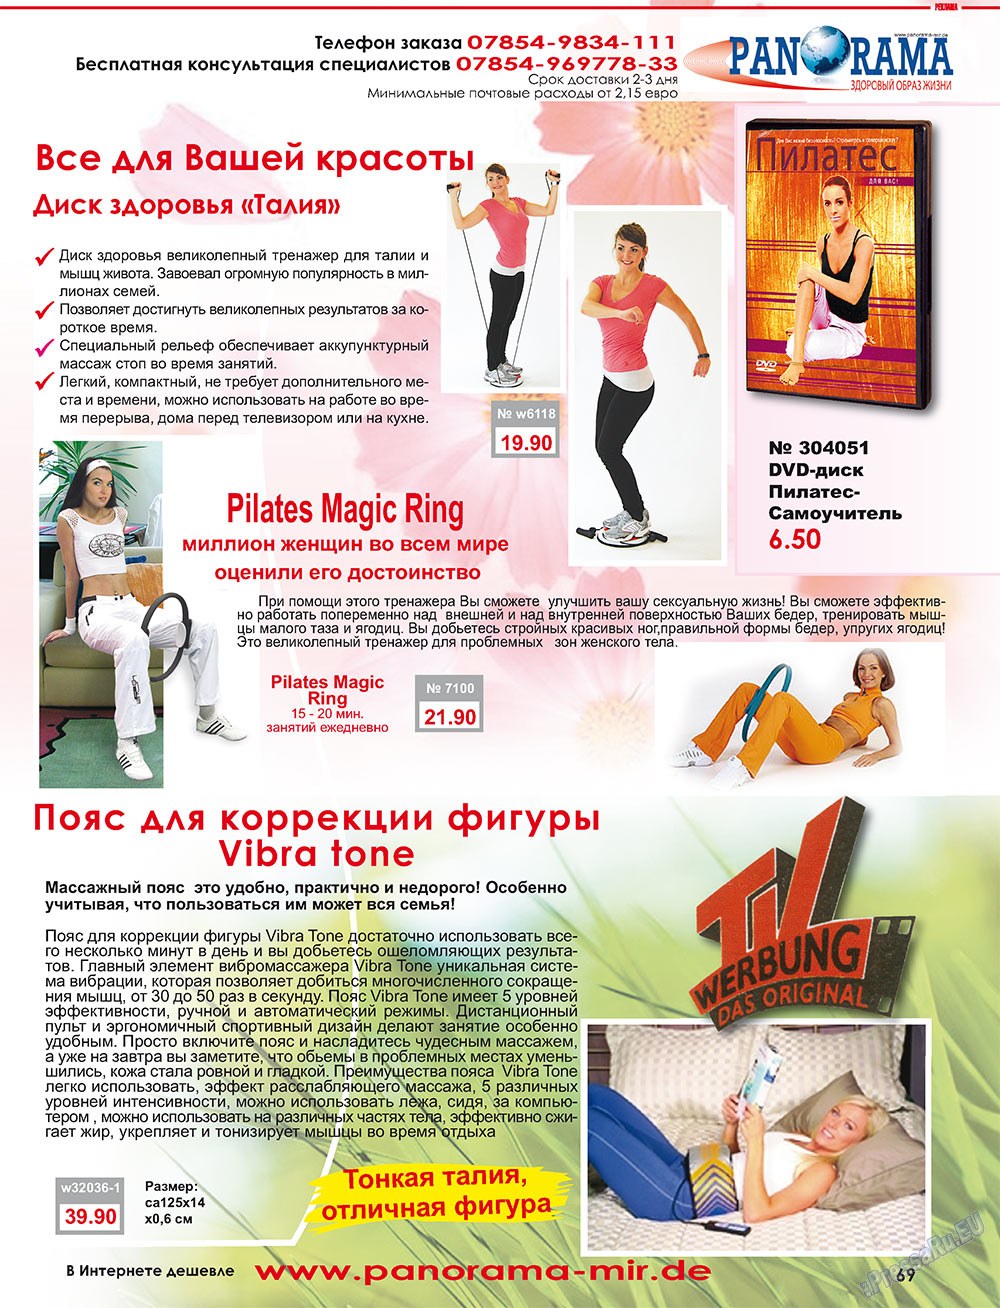 7плюс7я (журнал). 2011 год, номер 42, стр. 69